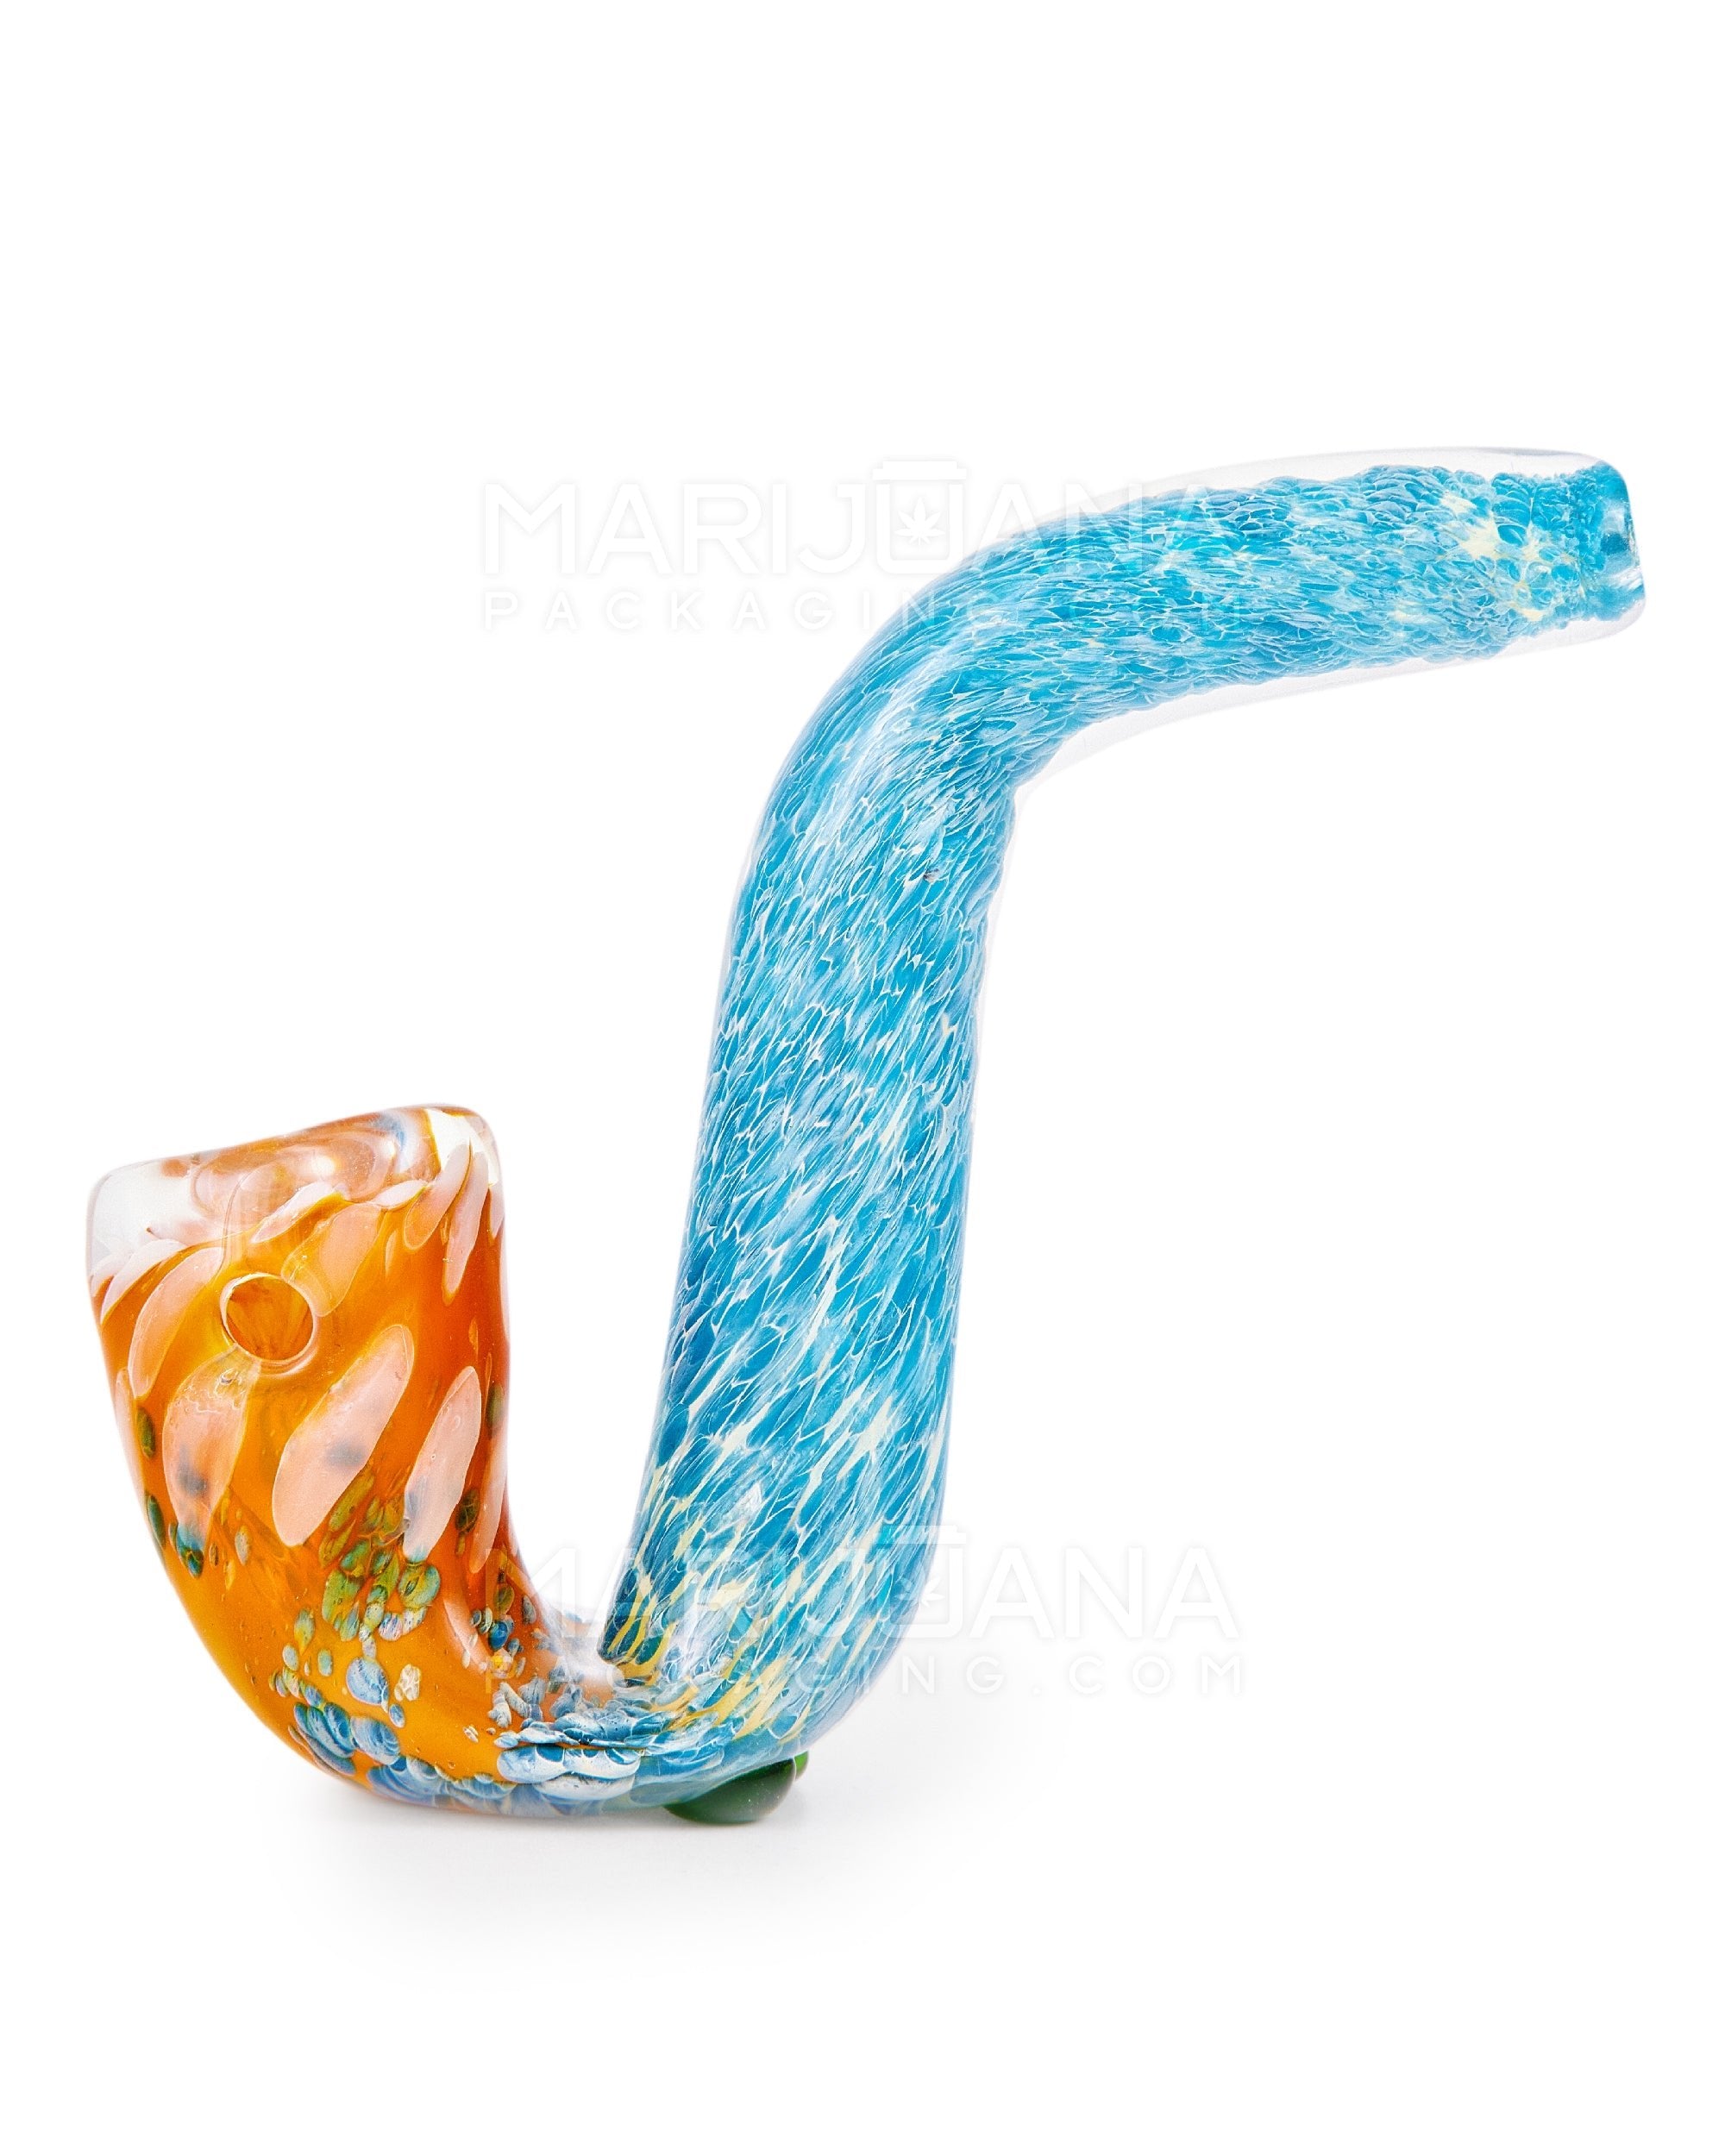 Frit & Fumed Sherlock Hand Pipe w/ Speckles | 5.5in Long - Glass - Assorted - 3